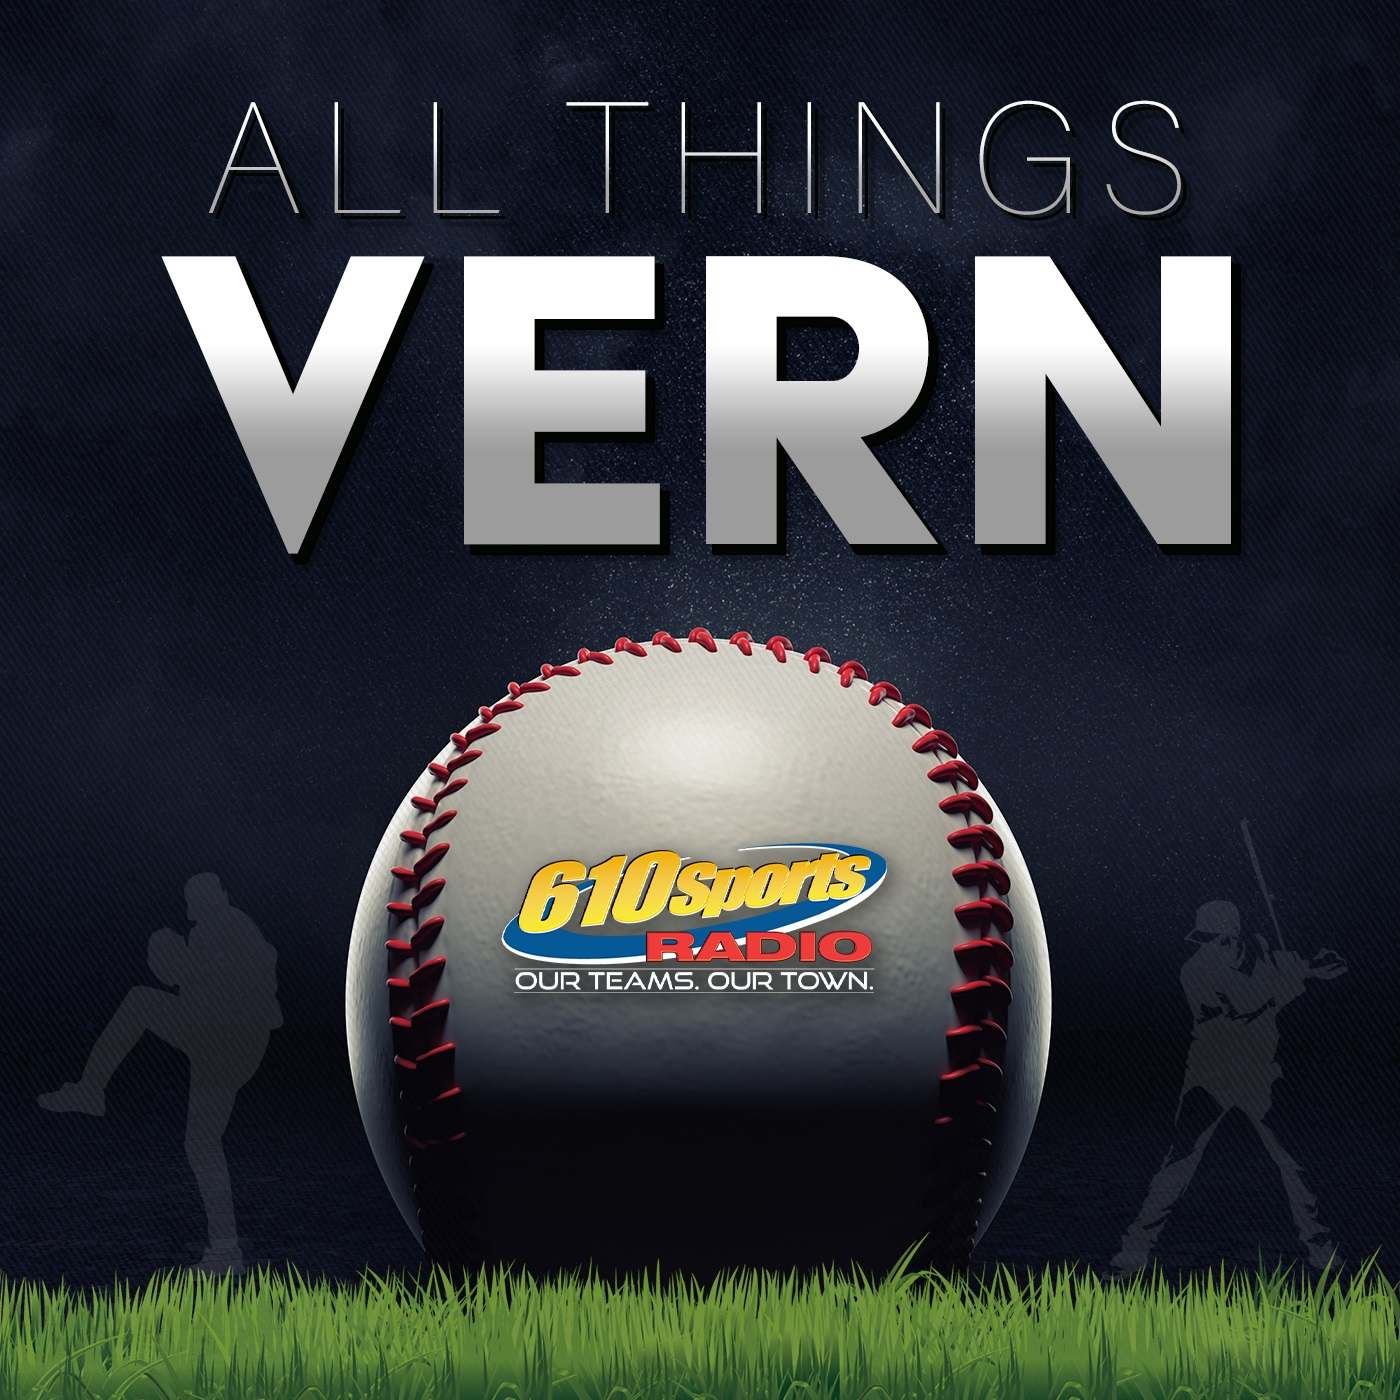 All Things Vern